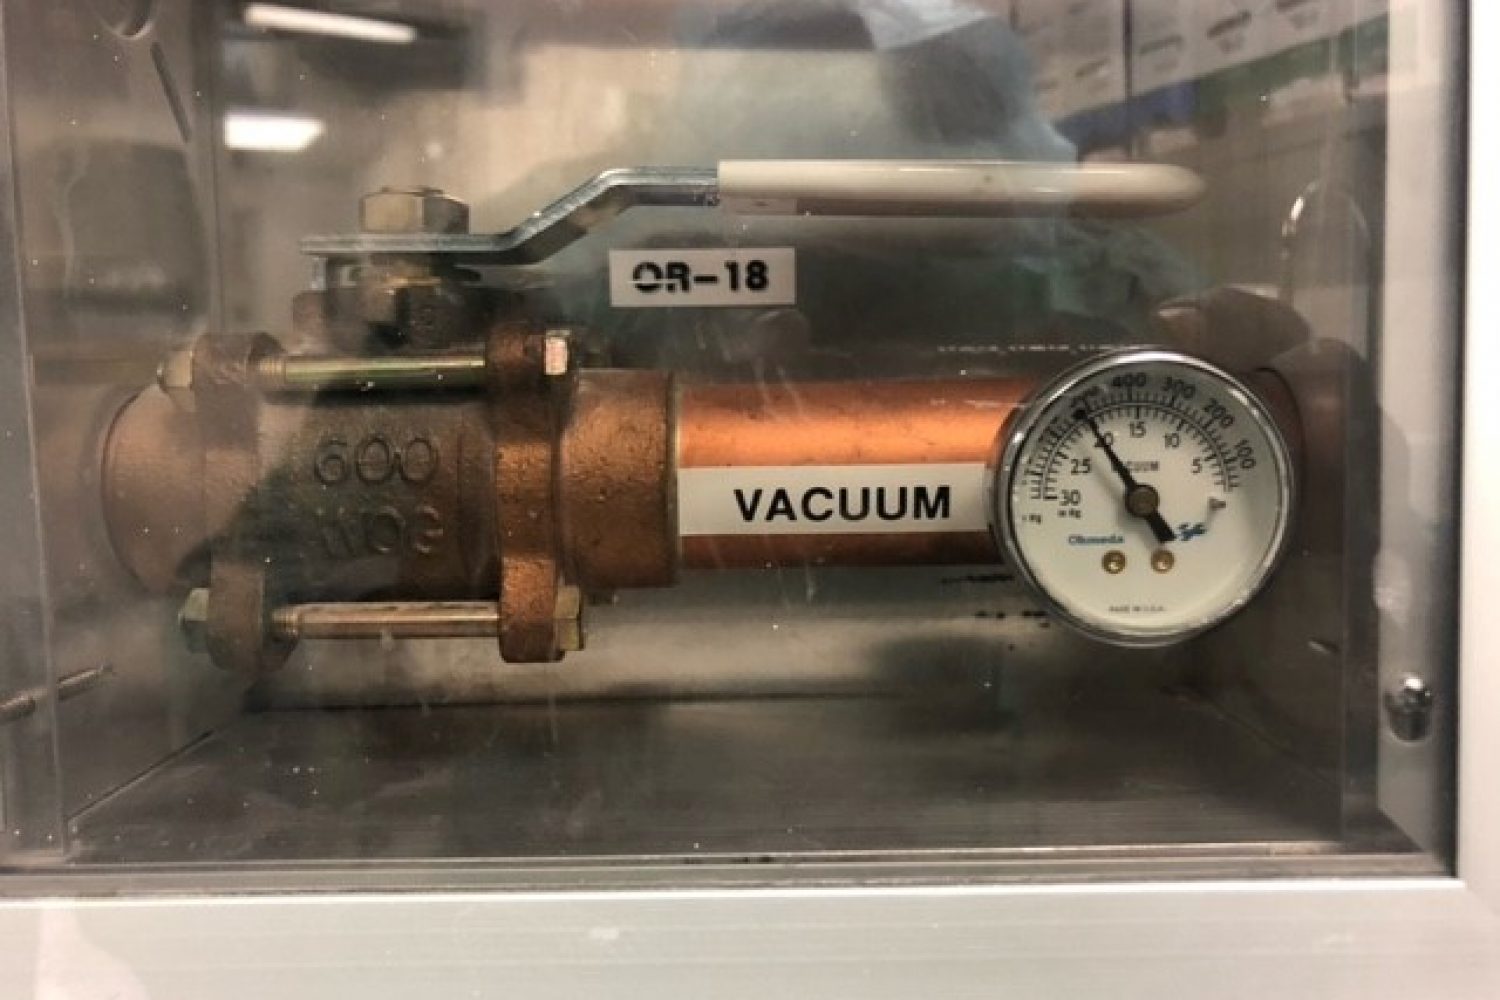 Vacuum Suction Hose Replacement